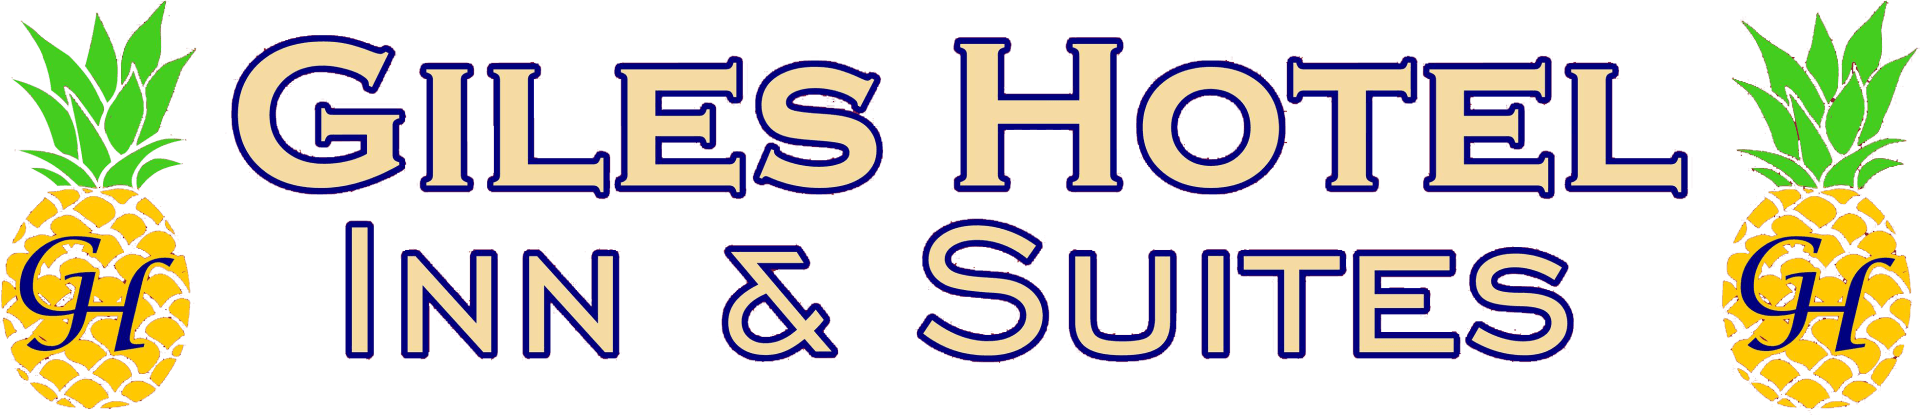 Giles Hotel Inn & Suites - Logo